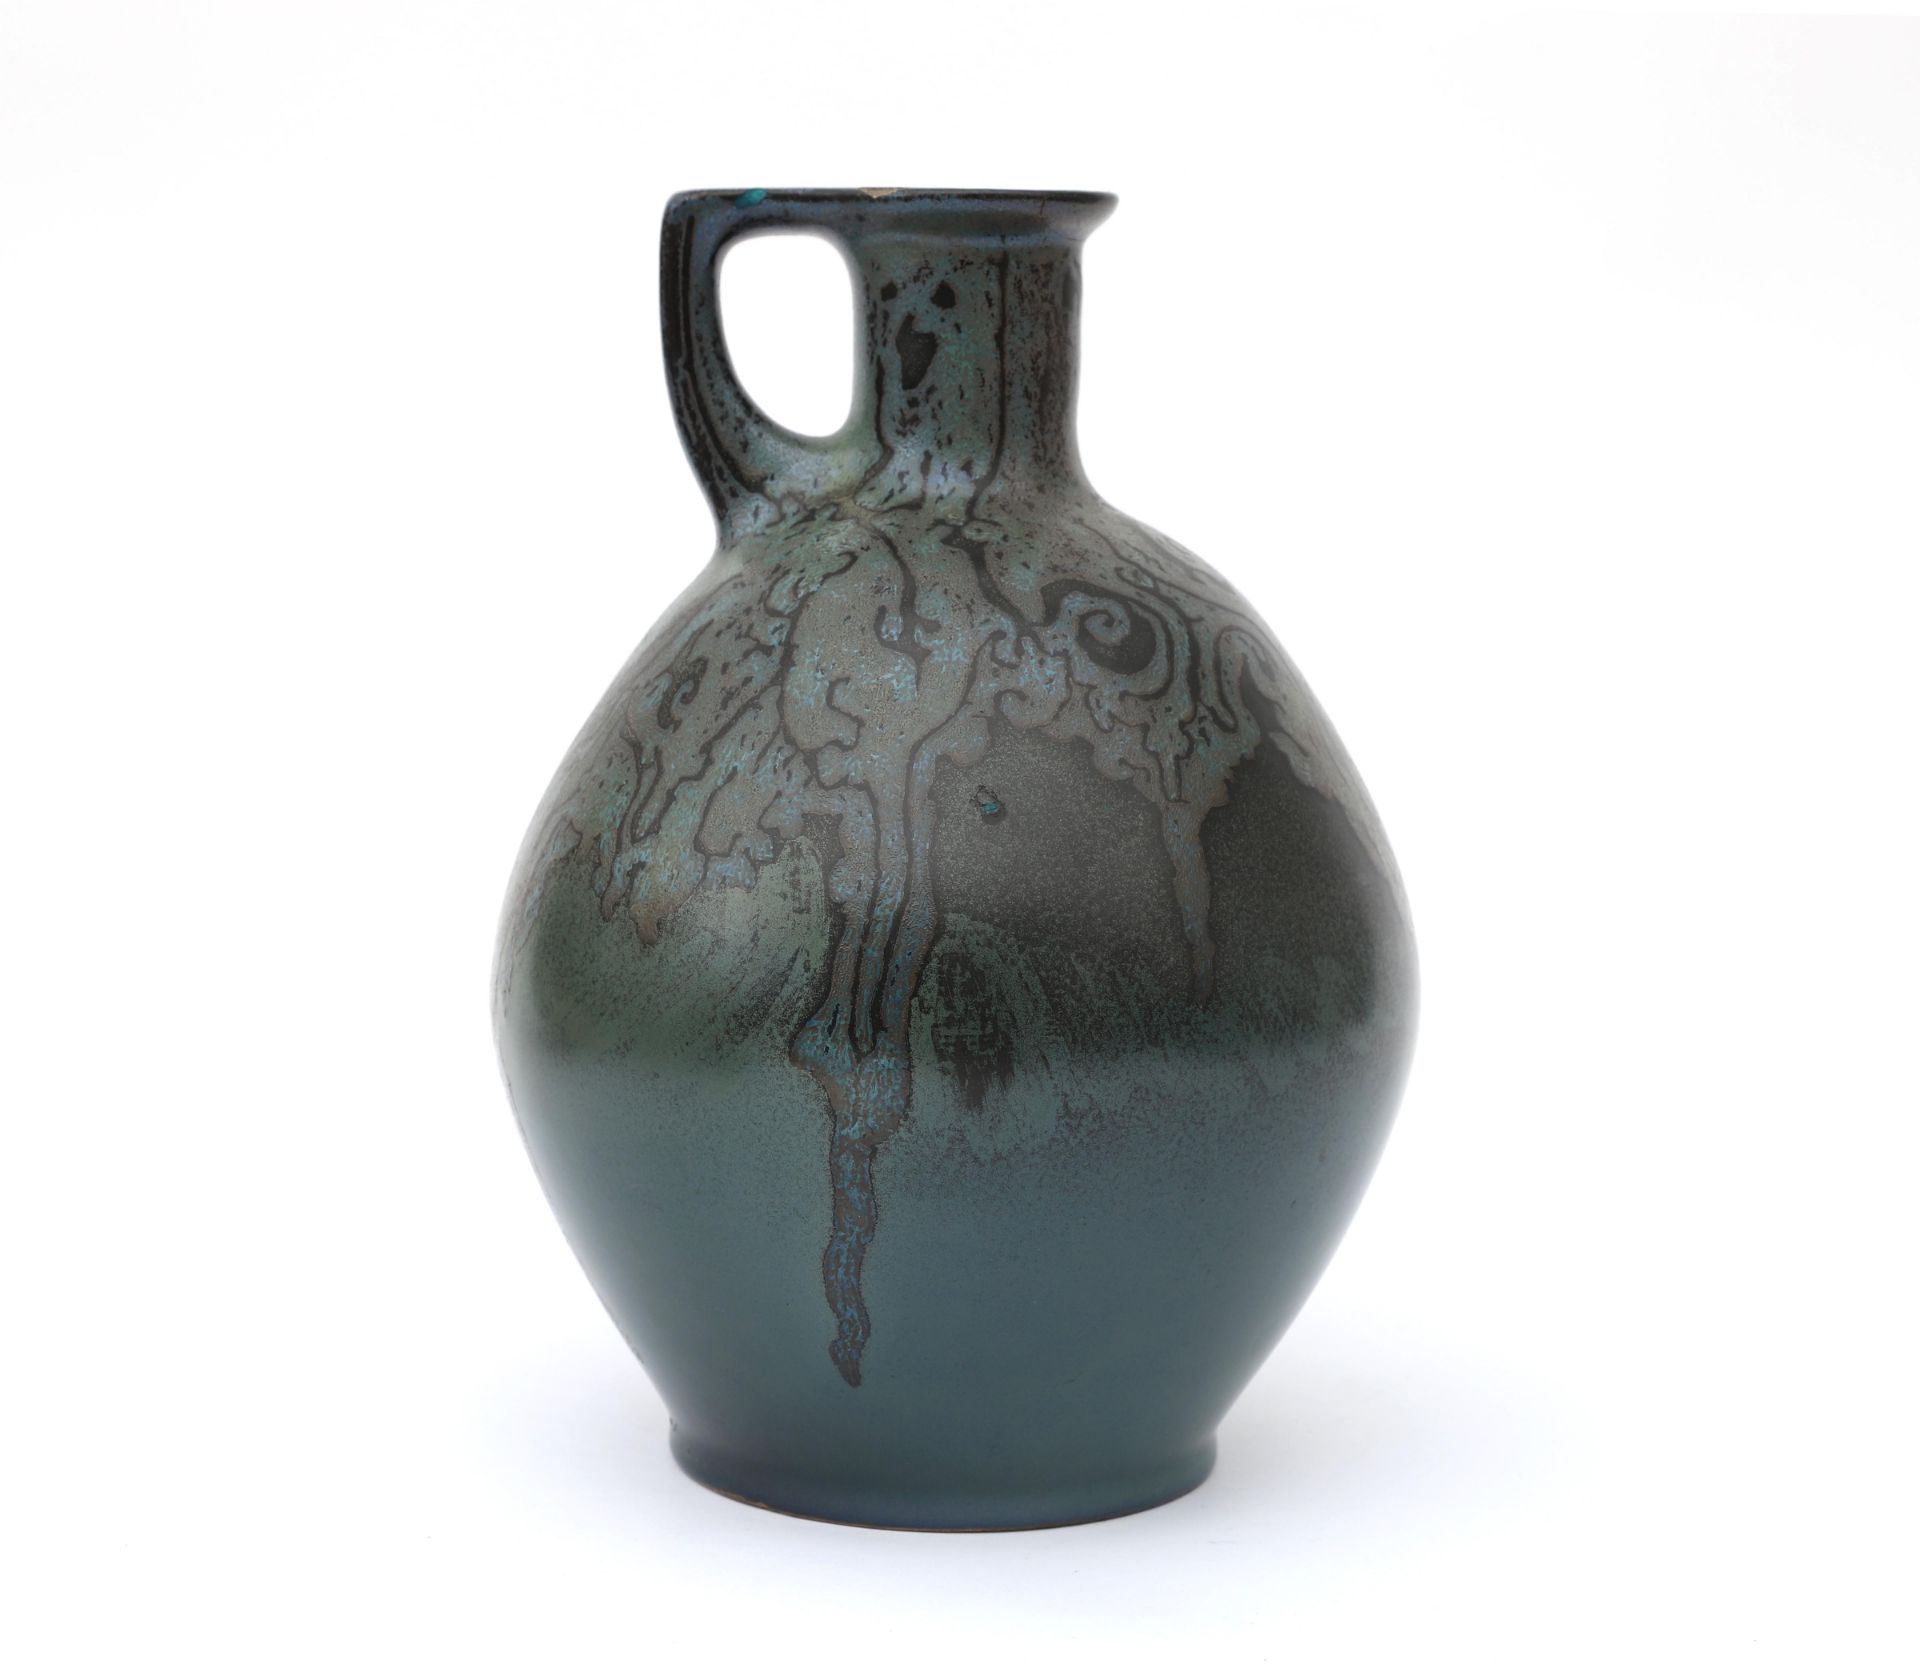 Kunstaardewerkfabriek St. Lukas, Utrecht A ceramic pitcher with handle, decorated with lustre glazed